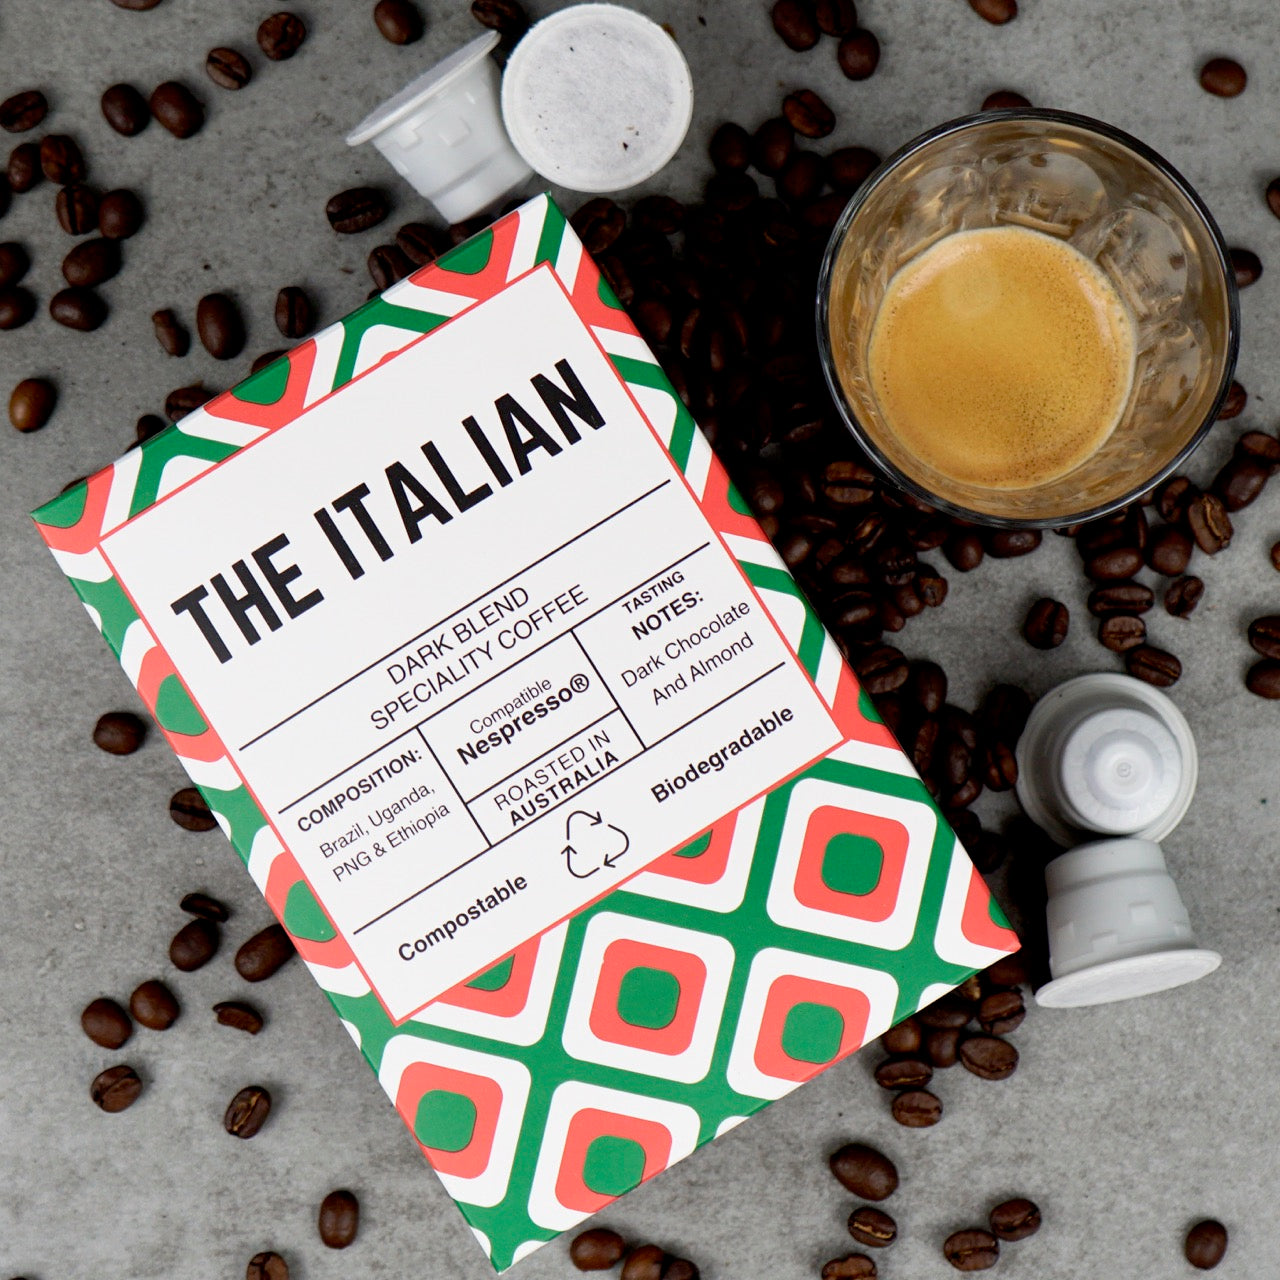 The Italian Coffee Pods